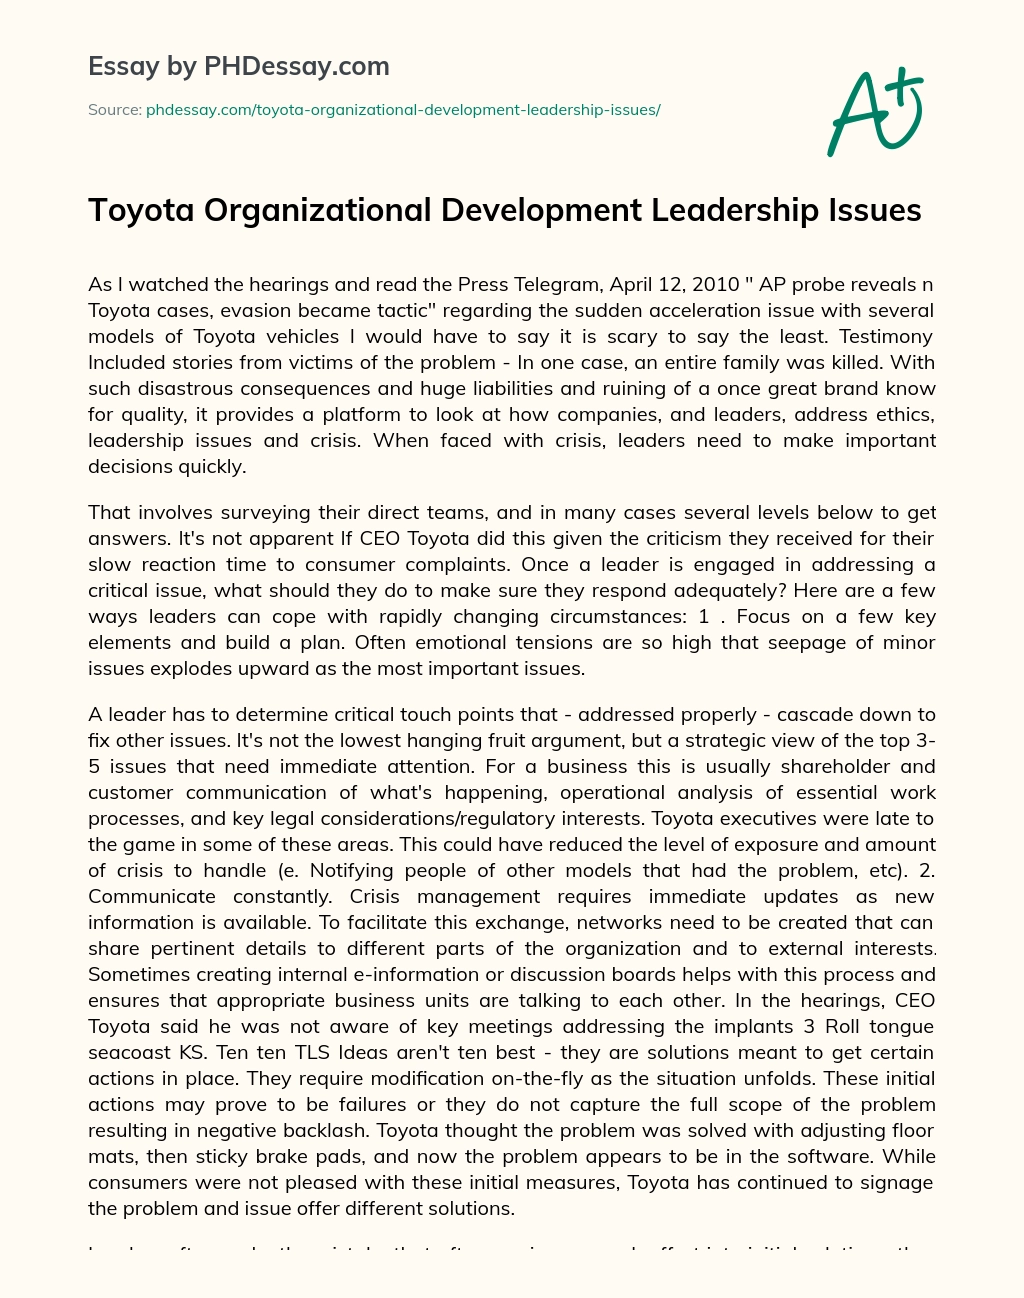 Toyota Organizational Development Leadership Issues essay